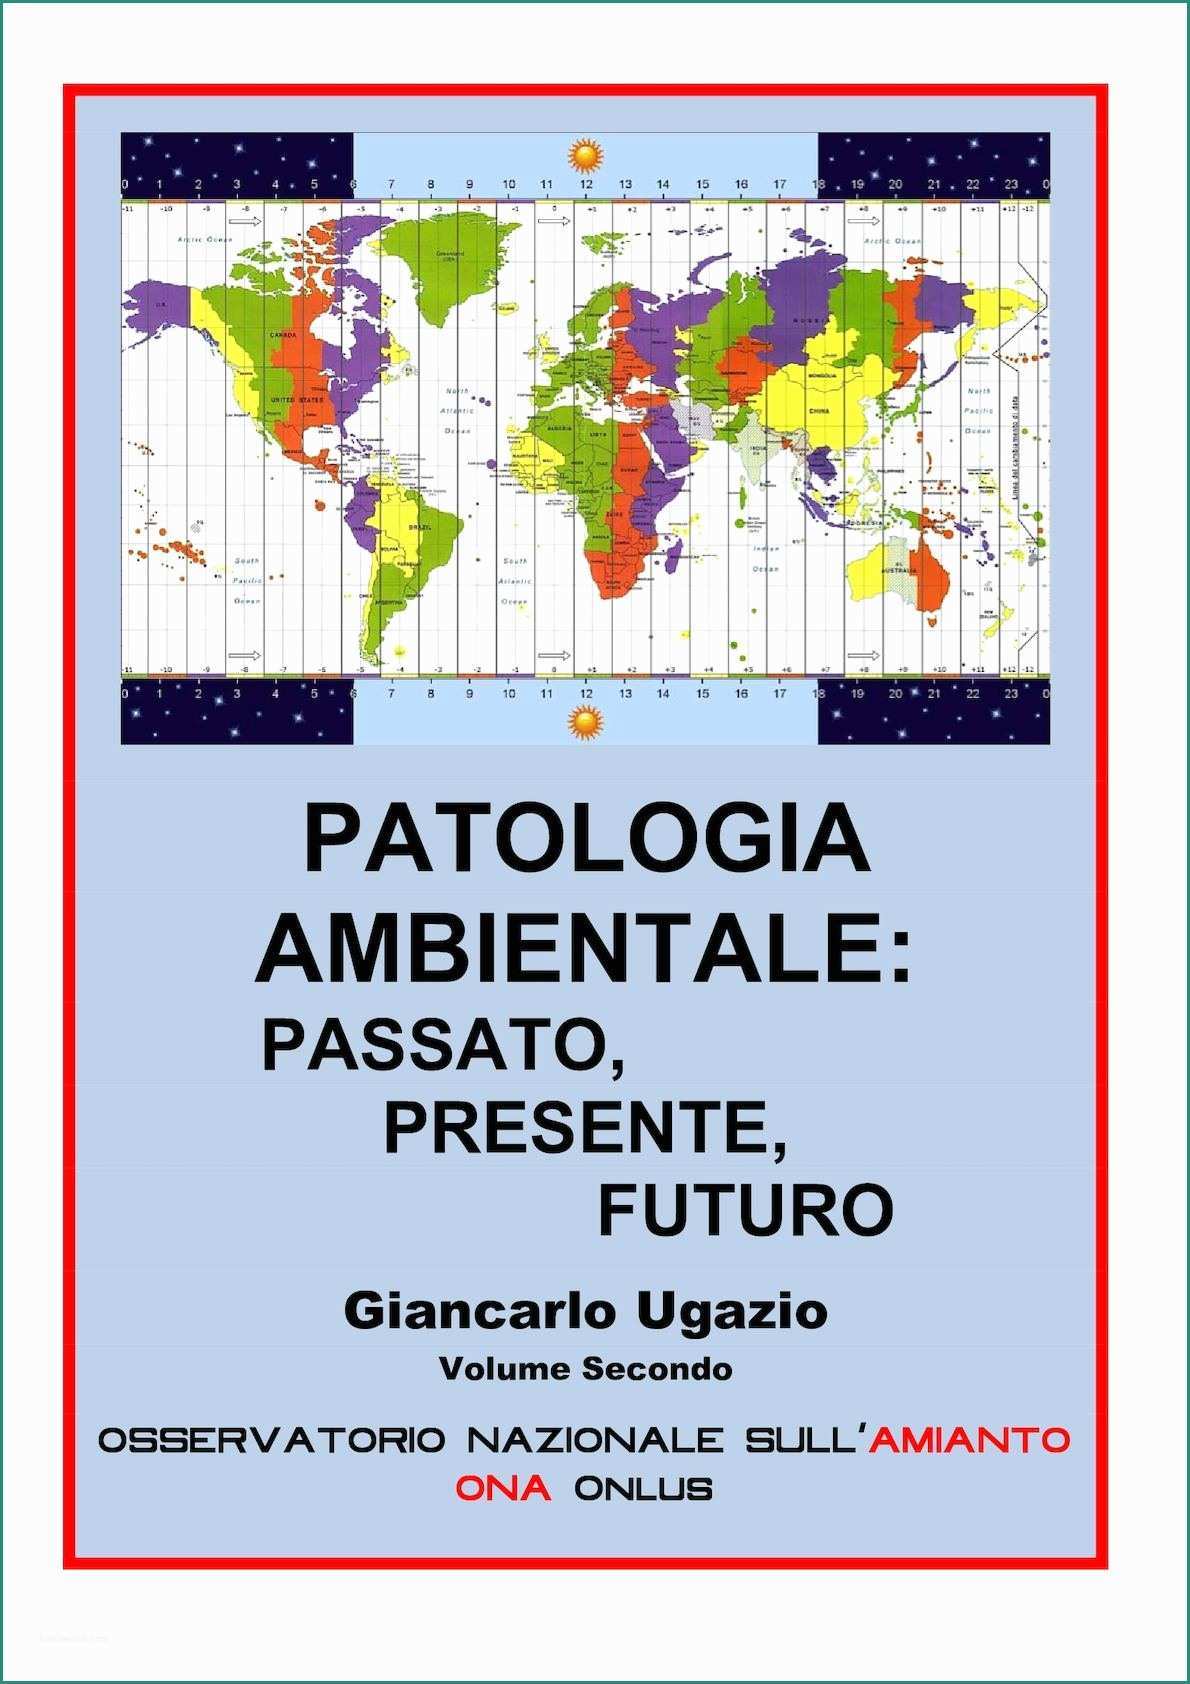 Fungo Riscaldante Leroy Merlin E Calaméo Ugazio Patologia Ambientale Vol Ii